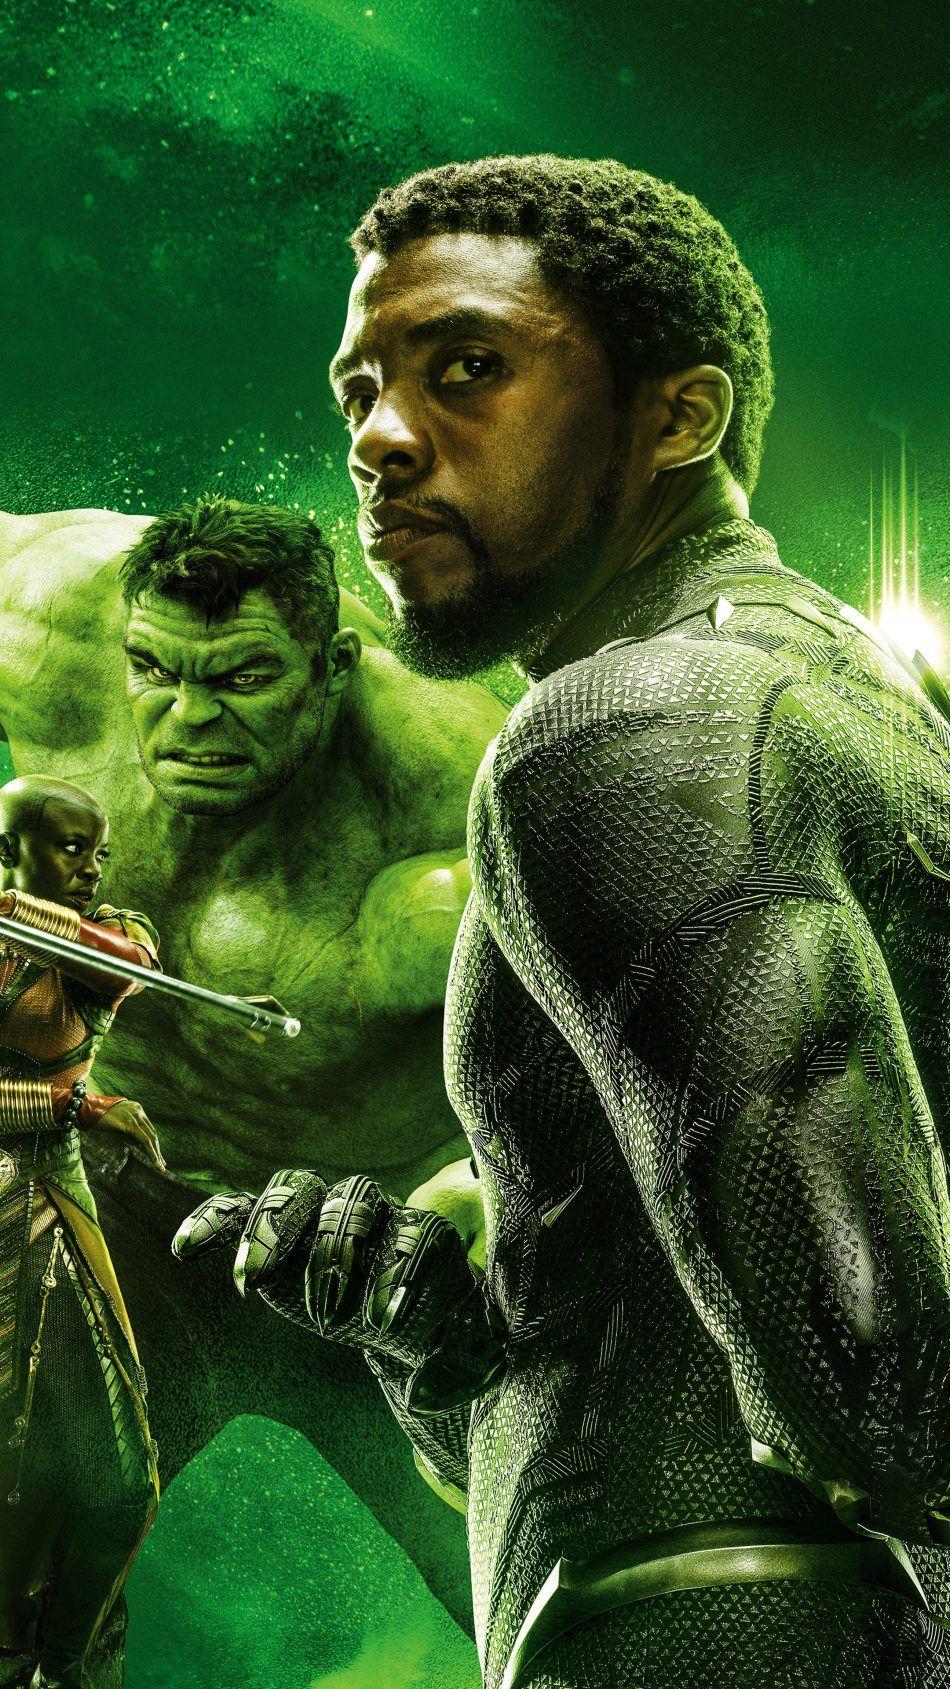 Hulk & Black Panther In Avengers Endgame Free 4K Ultra HD Mobile